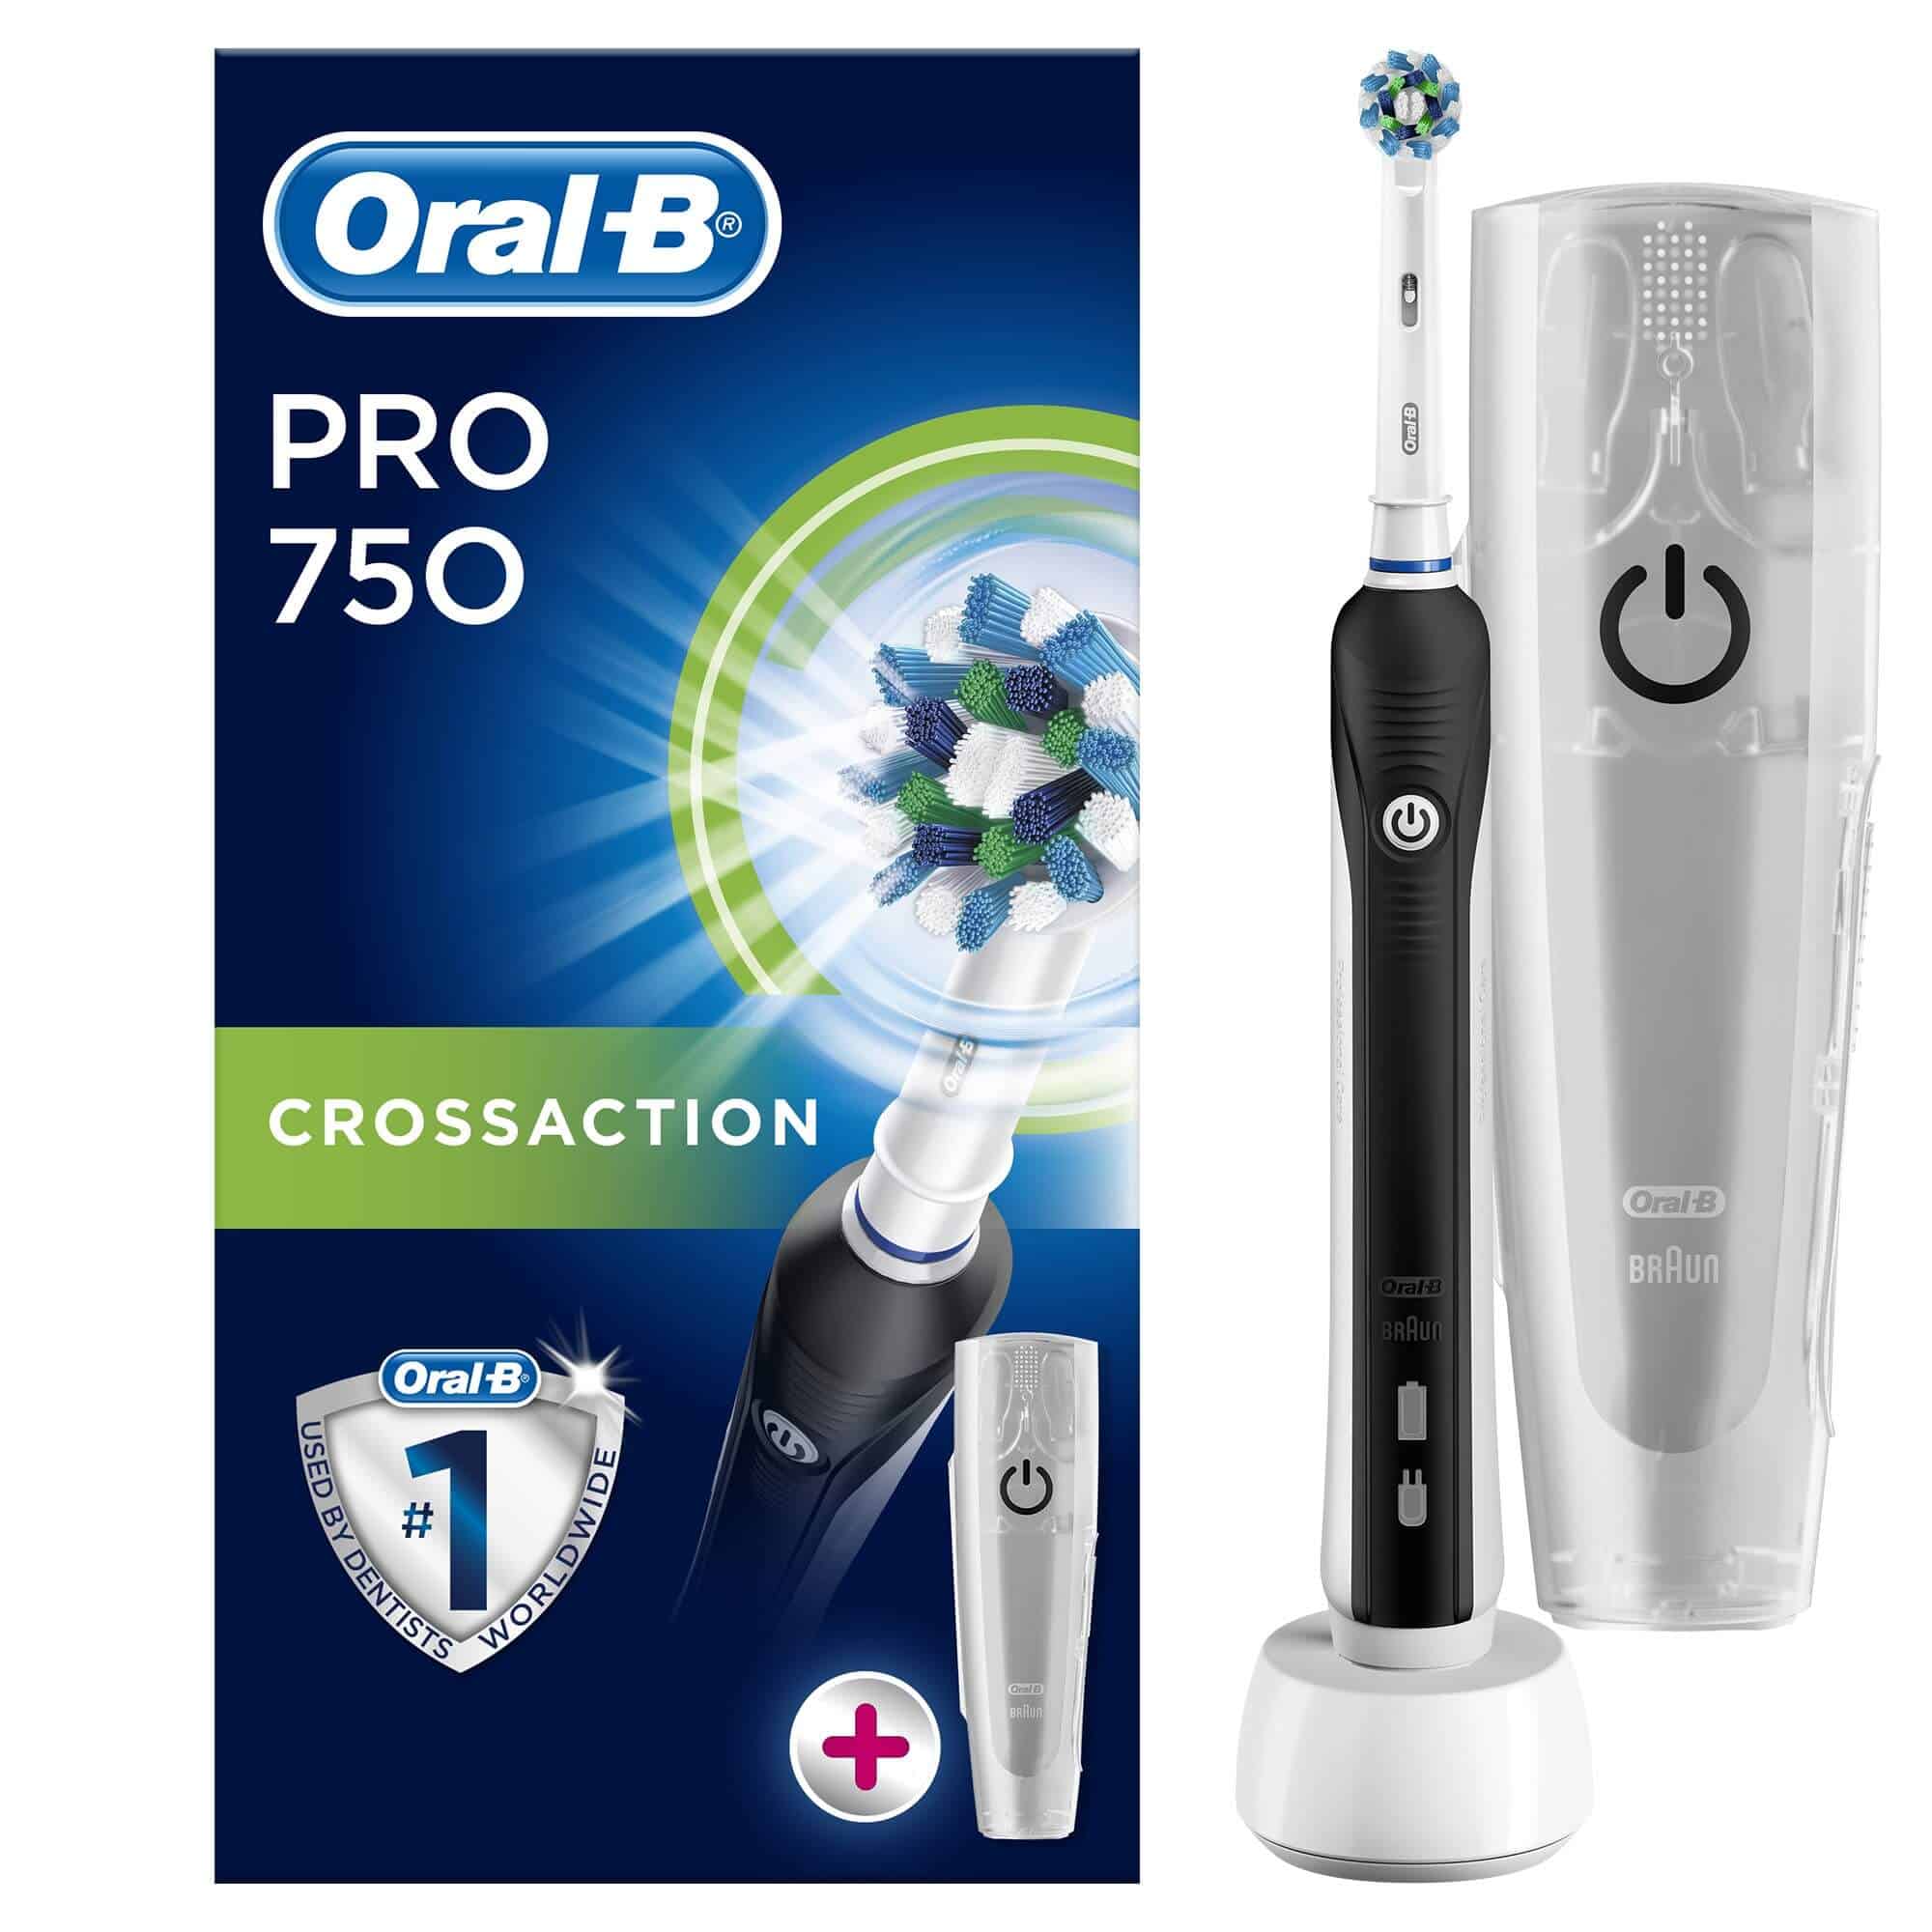 oral-b pro 750 crossaction 